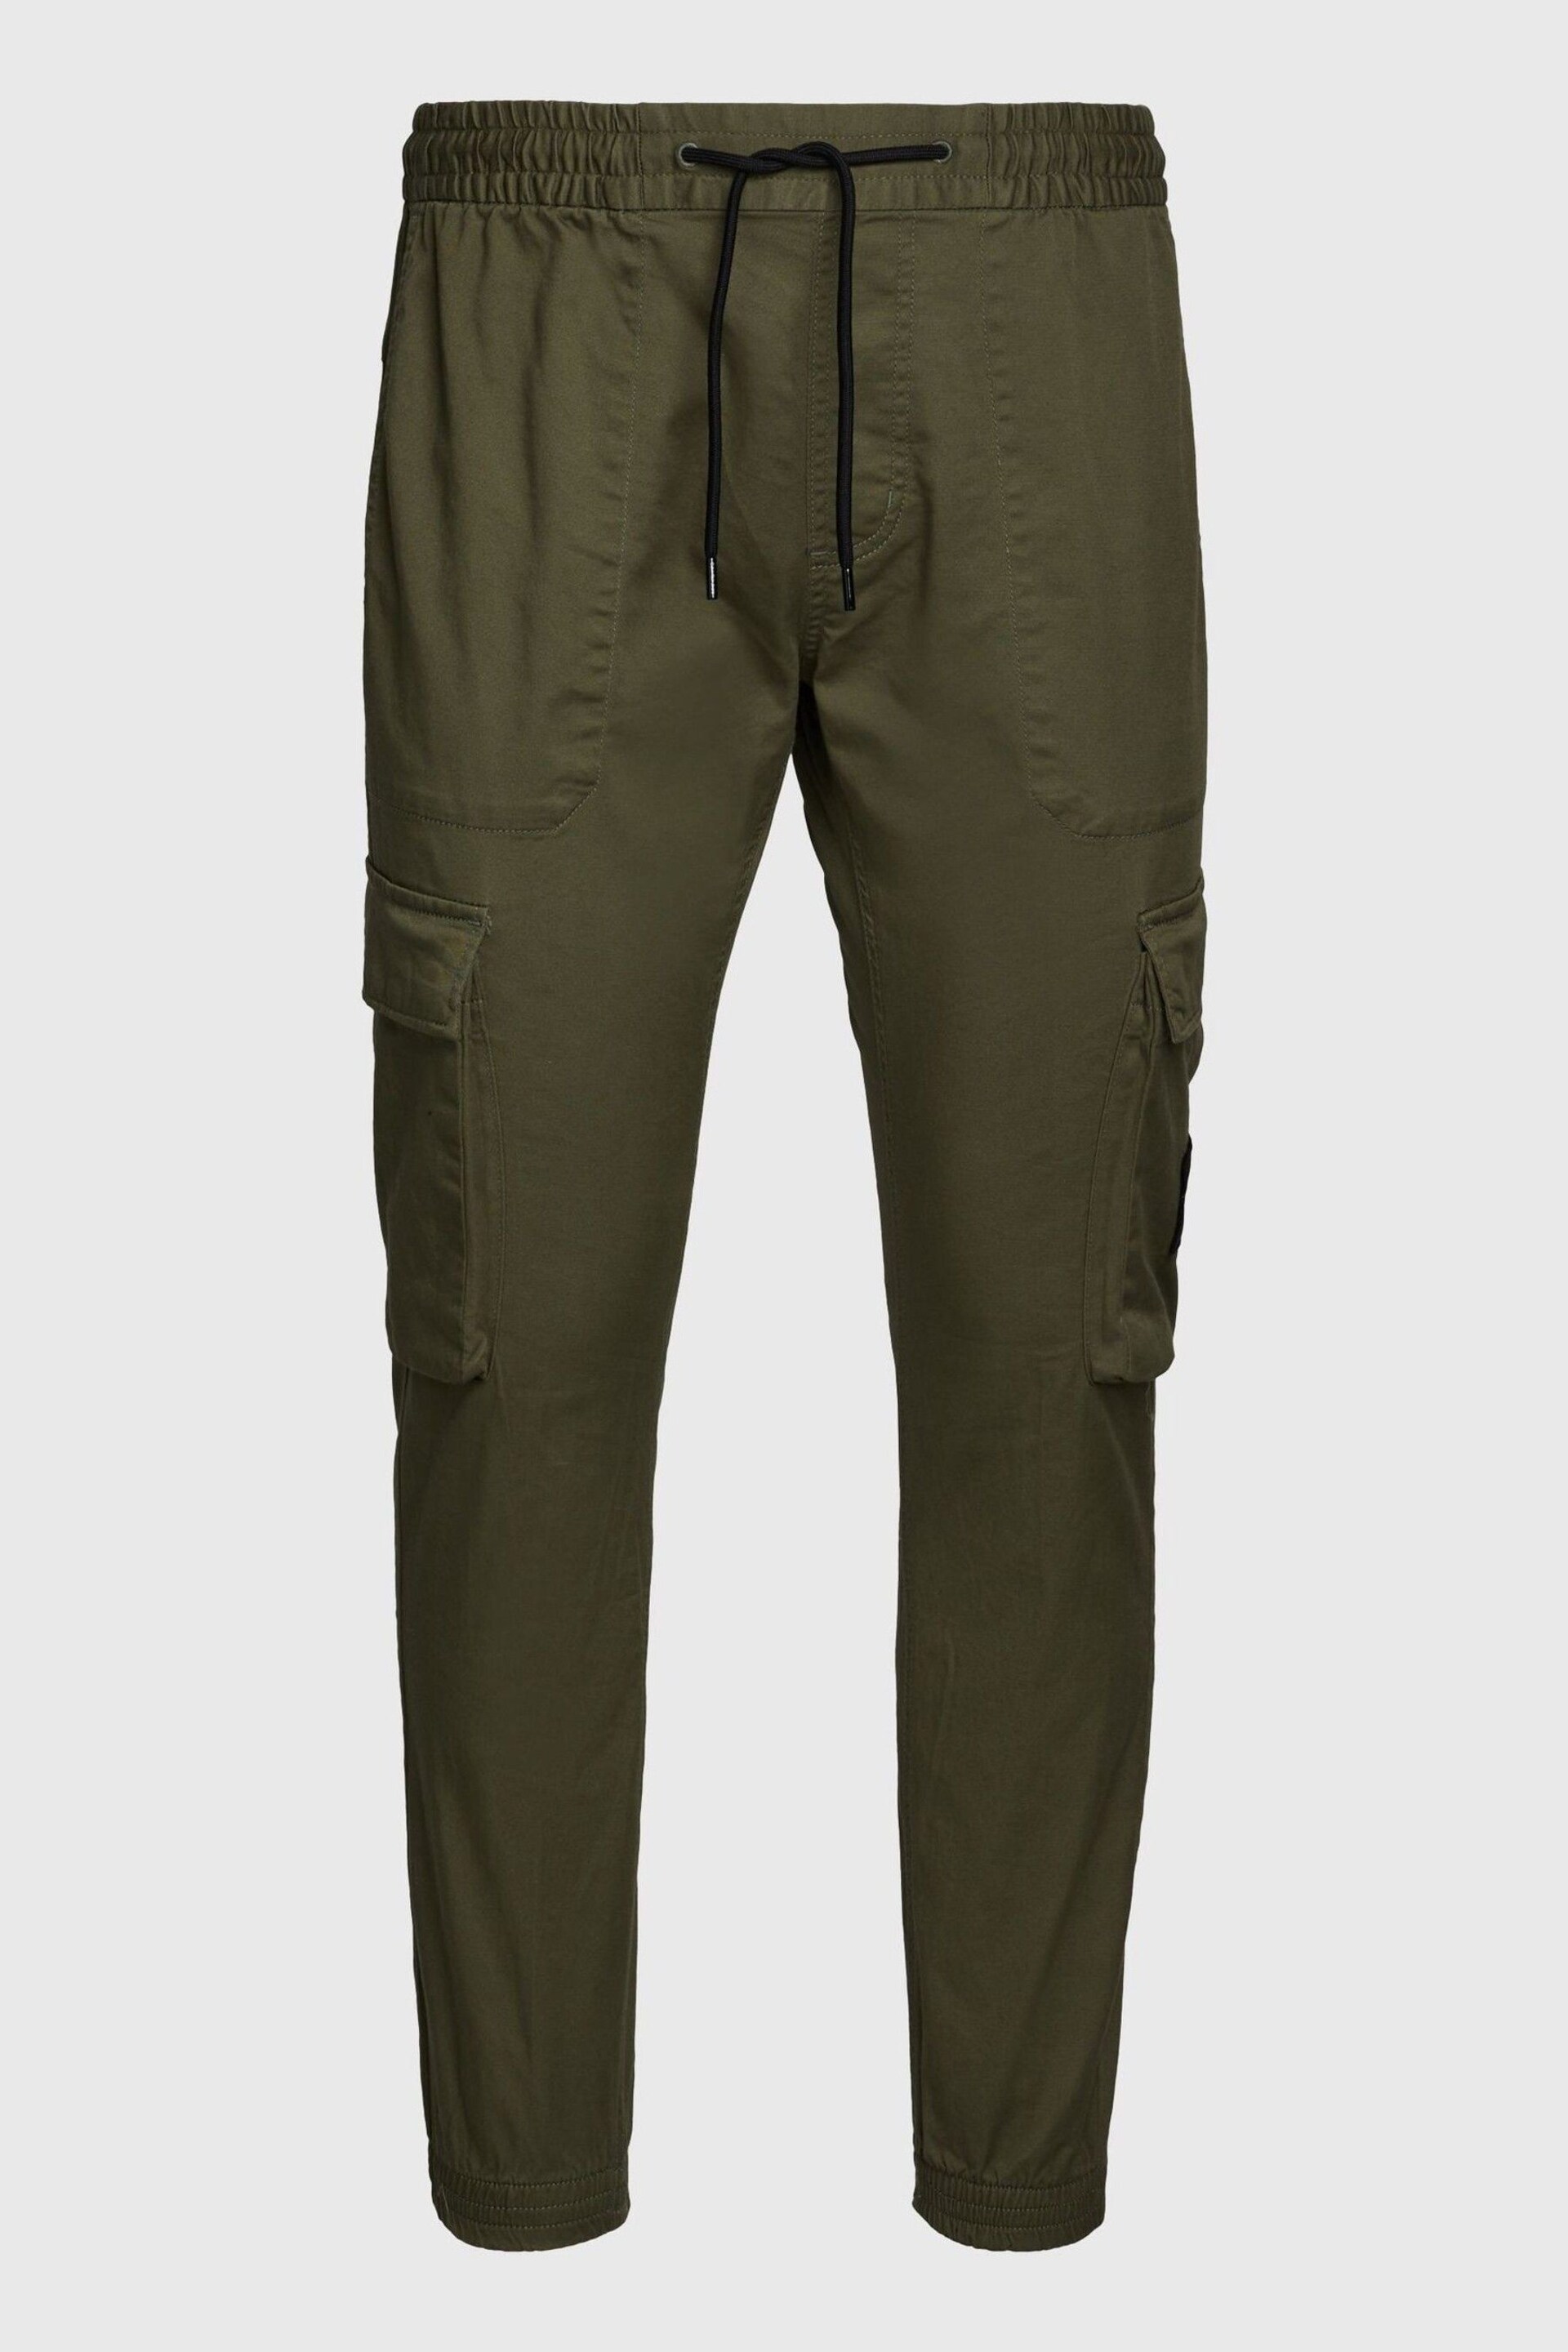 Calvin Klein Green Skinny Logo Cargo Trousers - Image 3 of 3